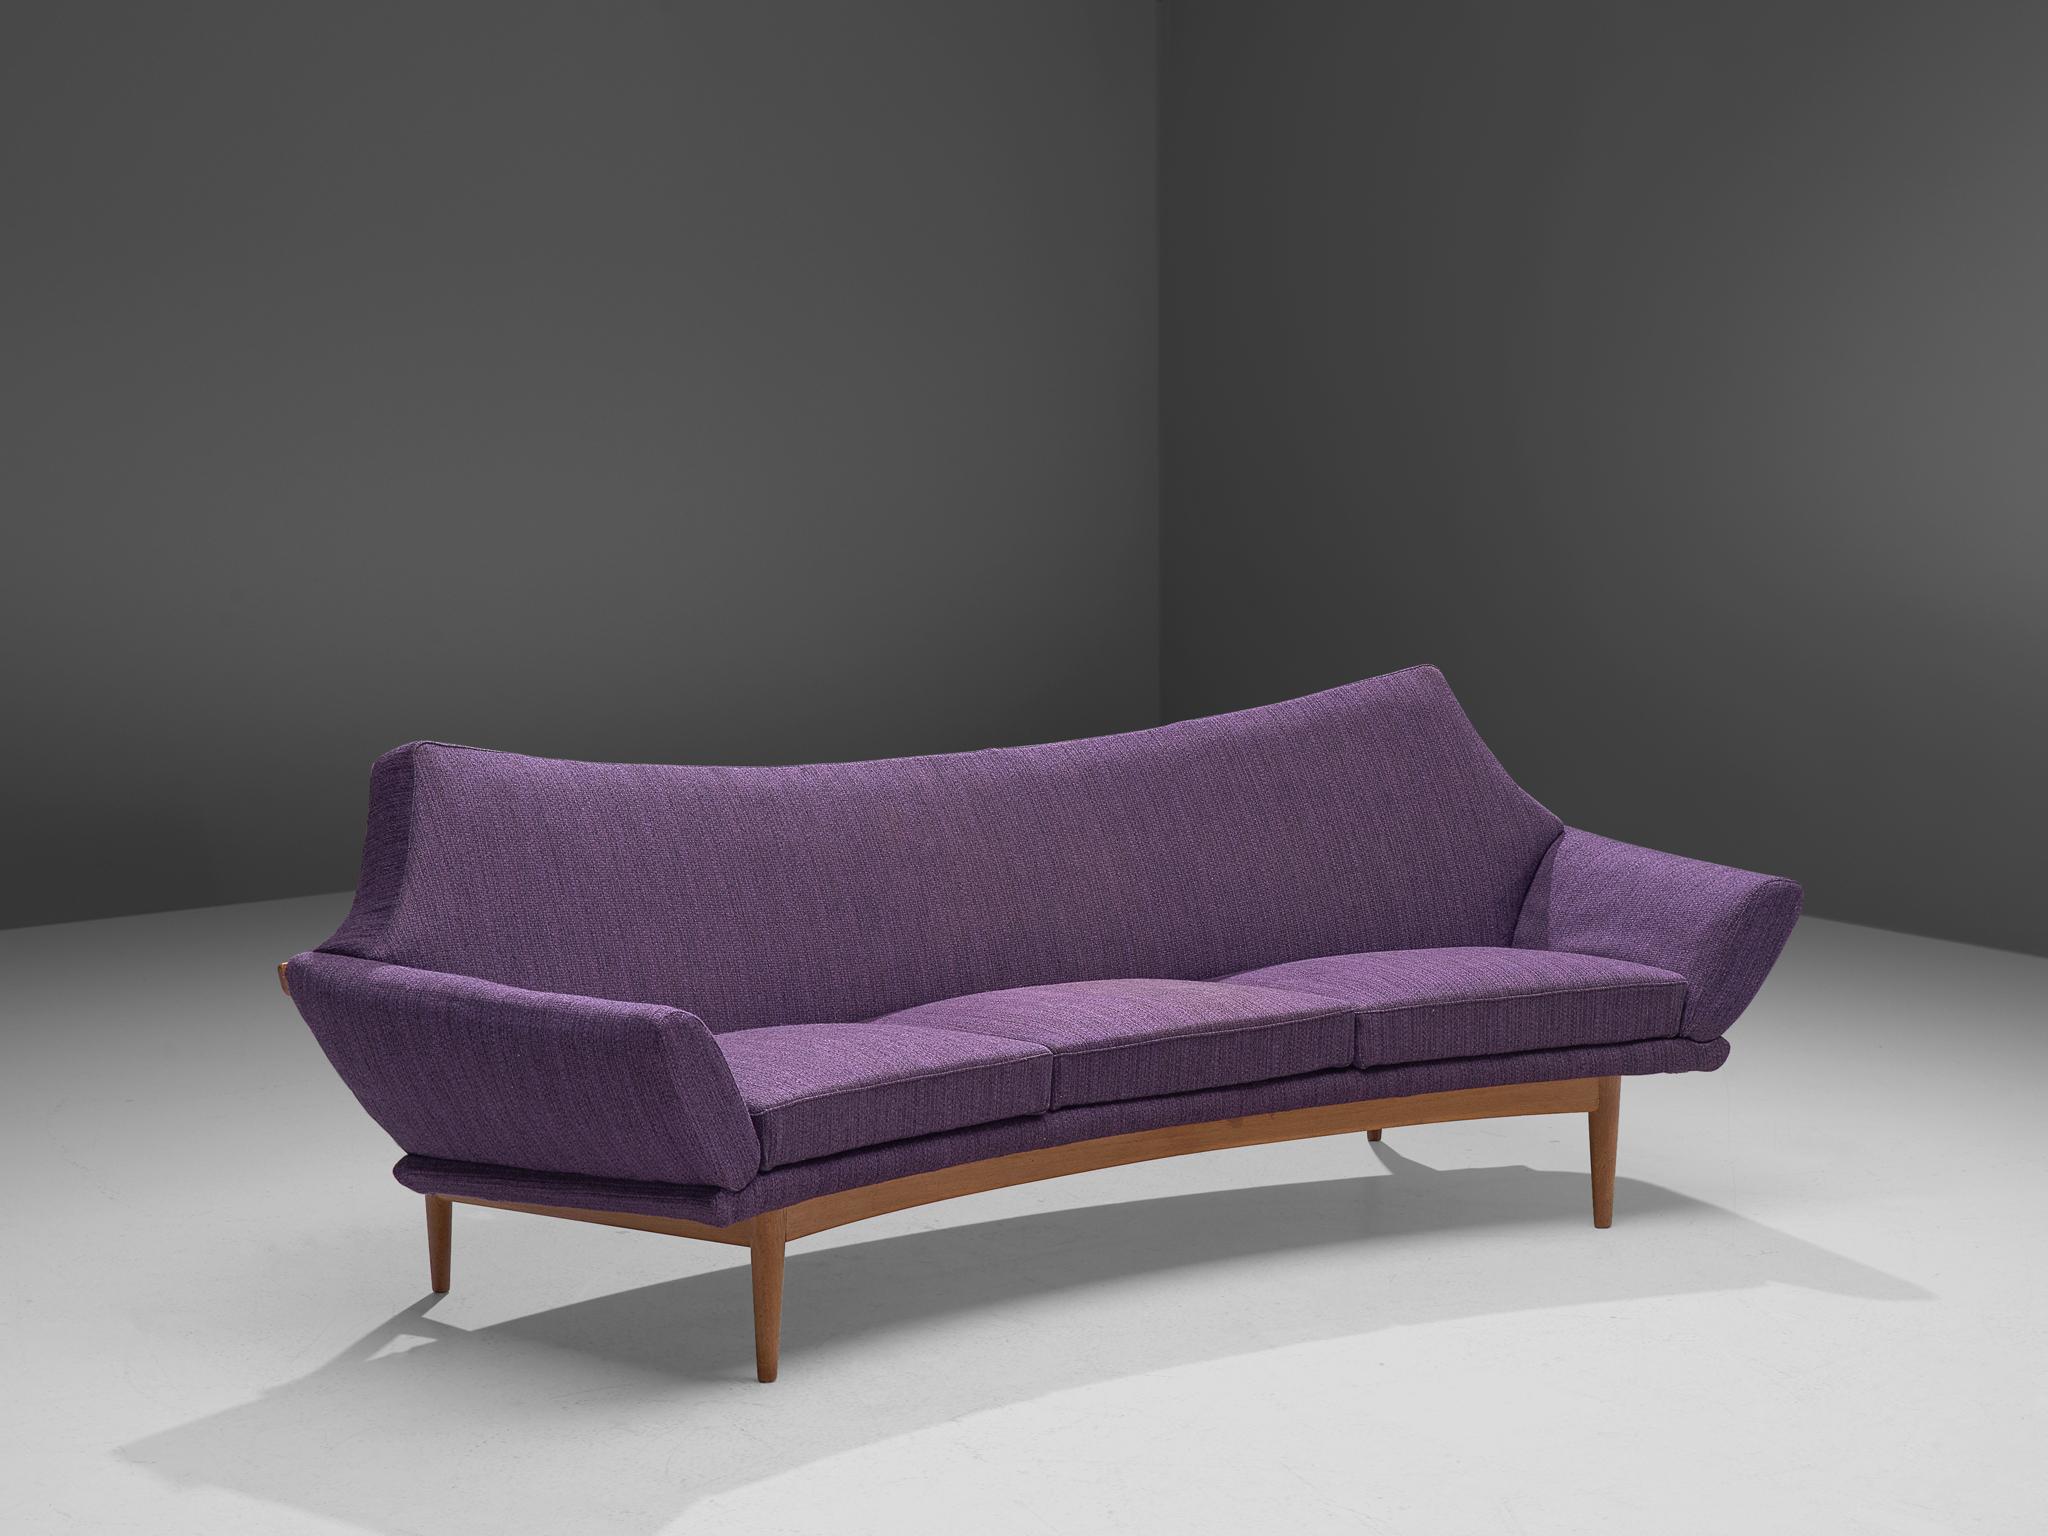 Scandinavian Modern Johannes Andersen Curved Sofa in Royal Purple Upholstery and Oak